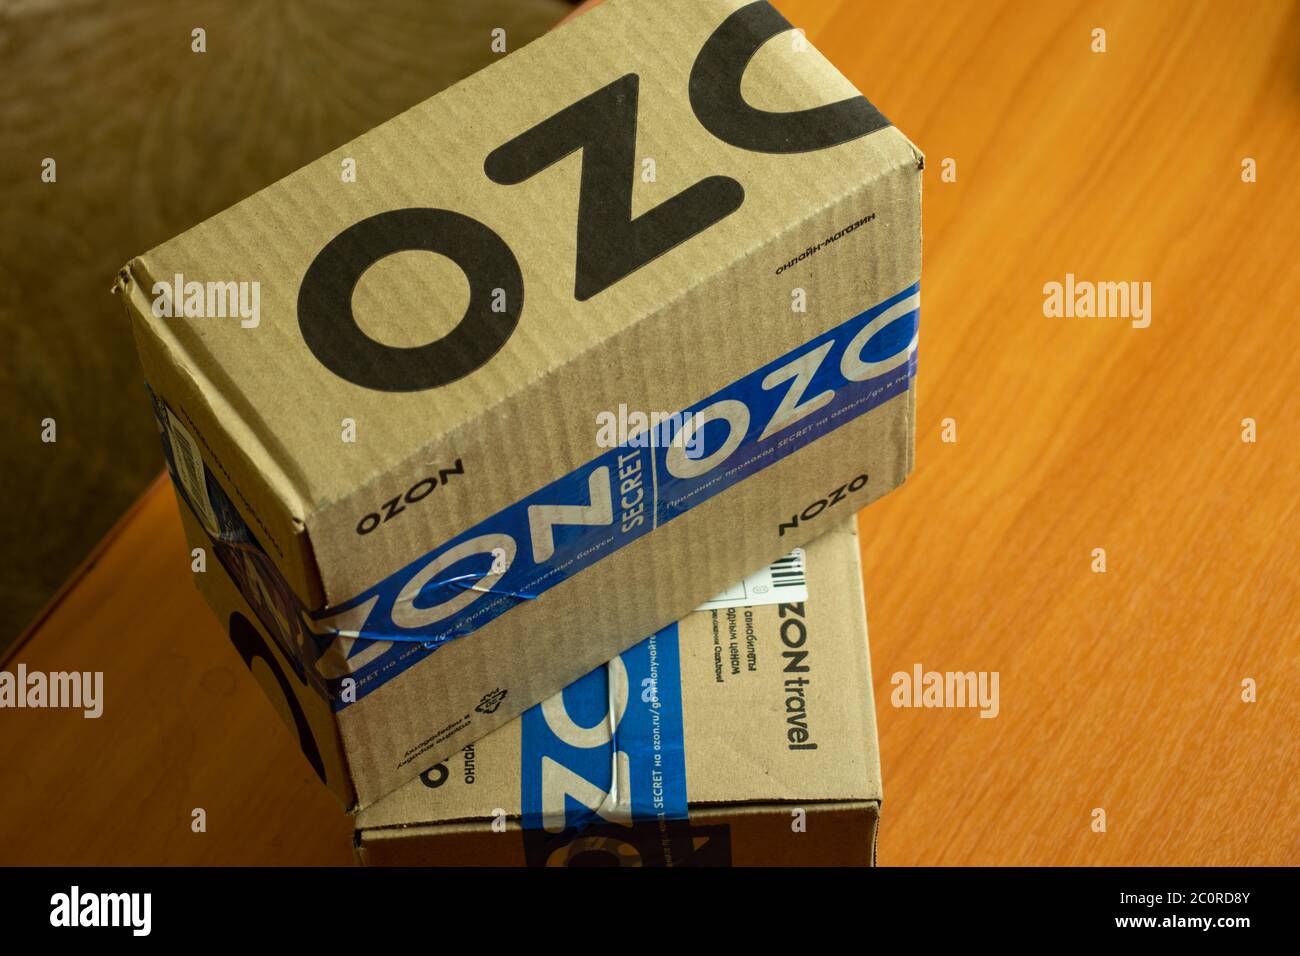 Los Angeles, California, USA - 1. Juni 2020: Ozon Box Delivery Paket close-up, illustrative Editorial. Stockfoto